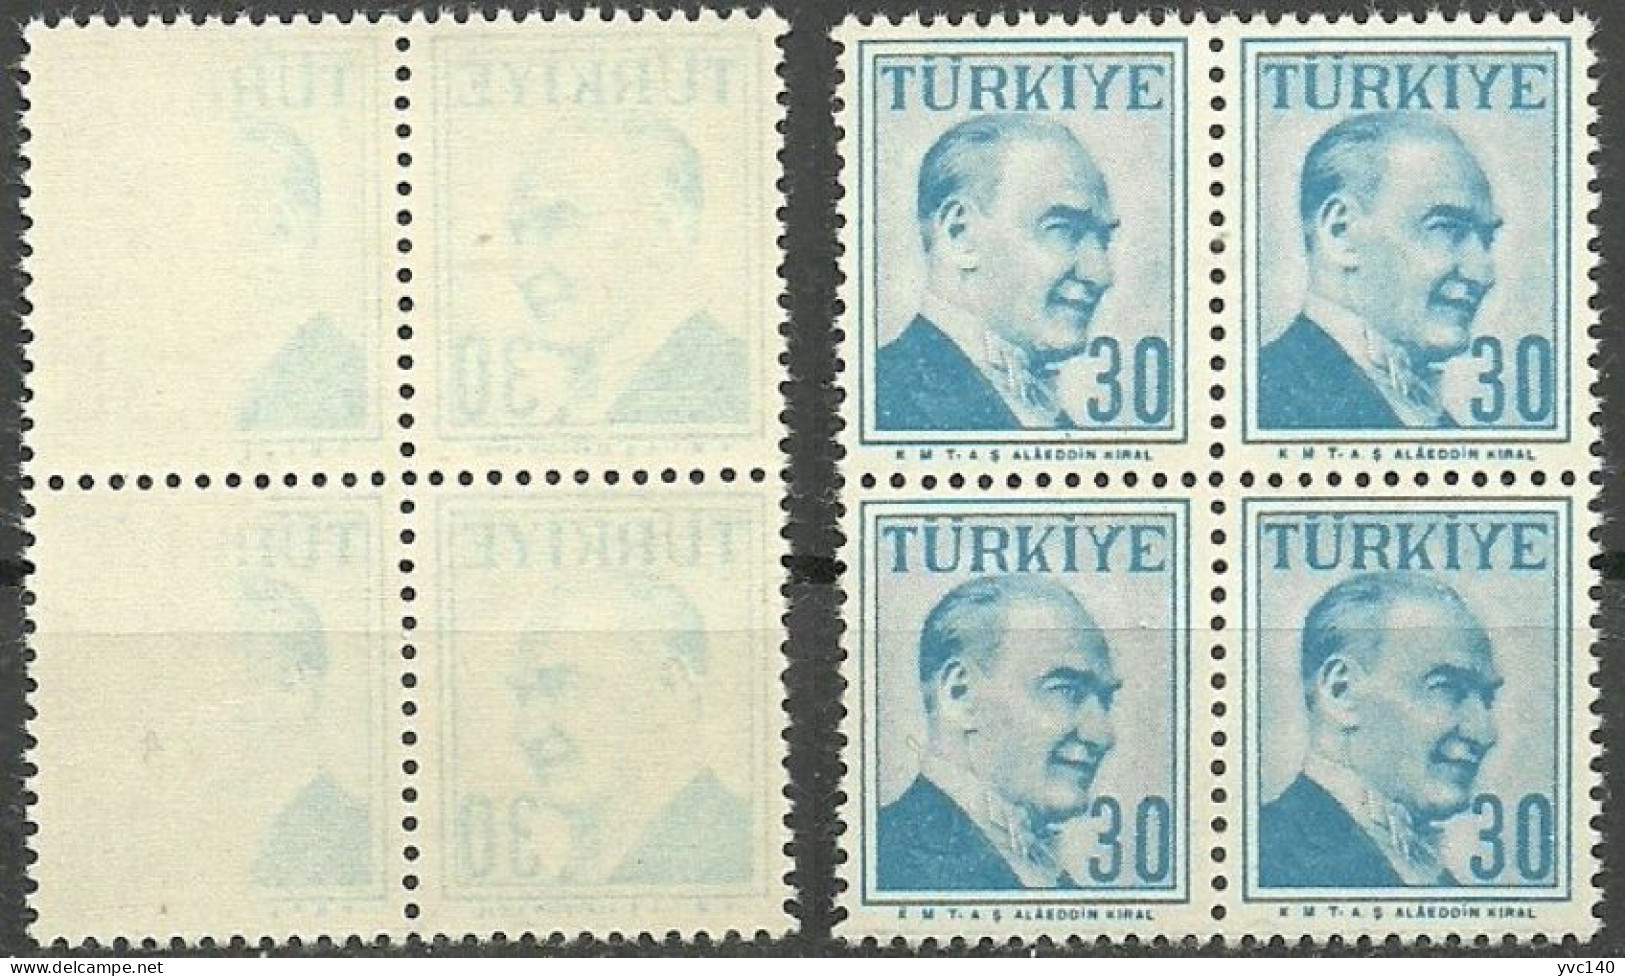 Turkey; 1957 Regular Postage Stamp 30 K. "Abklatsch Print" - Unused Stamps